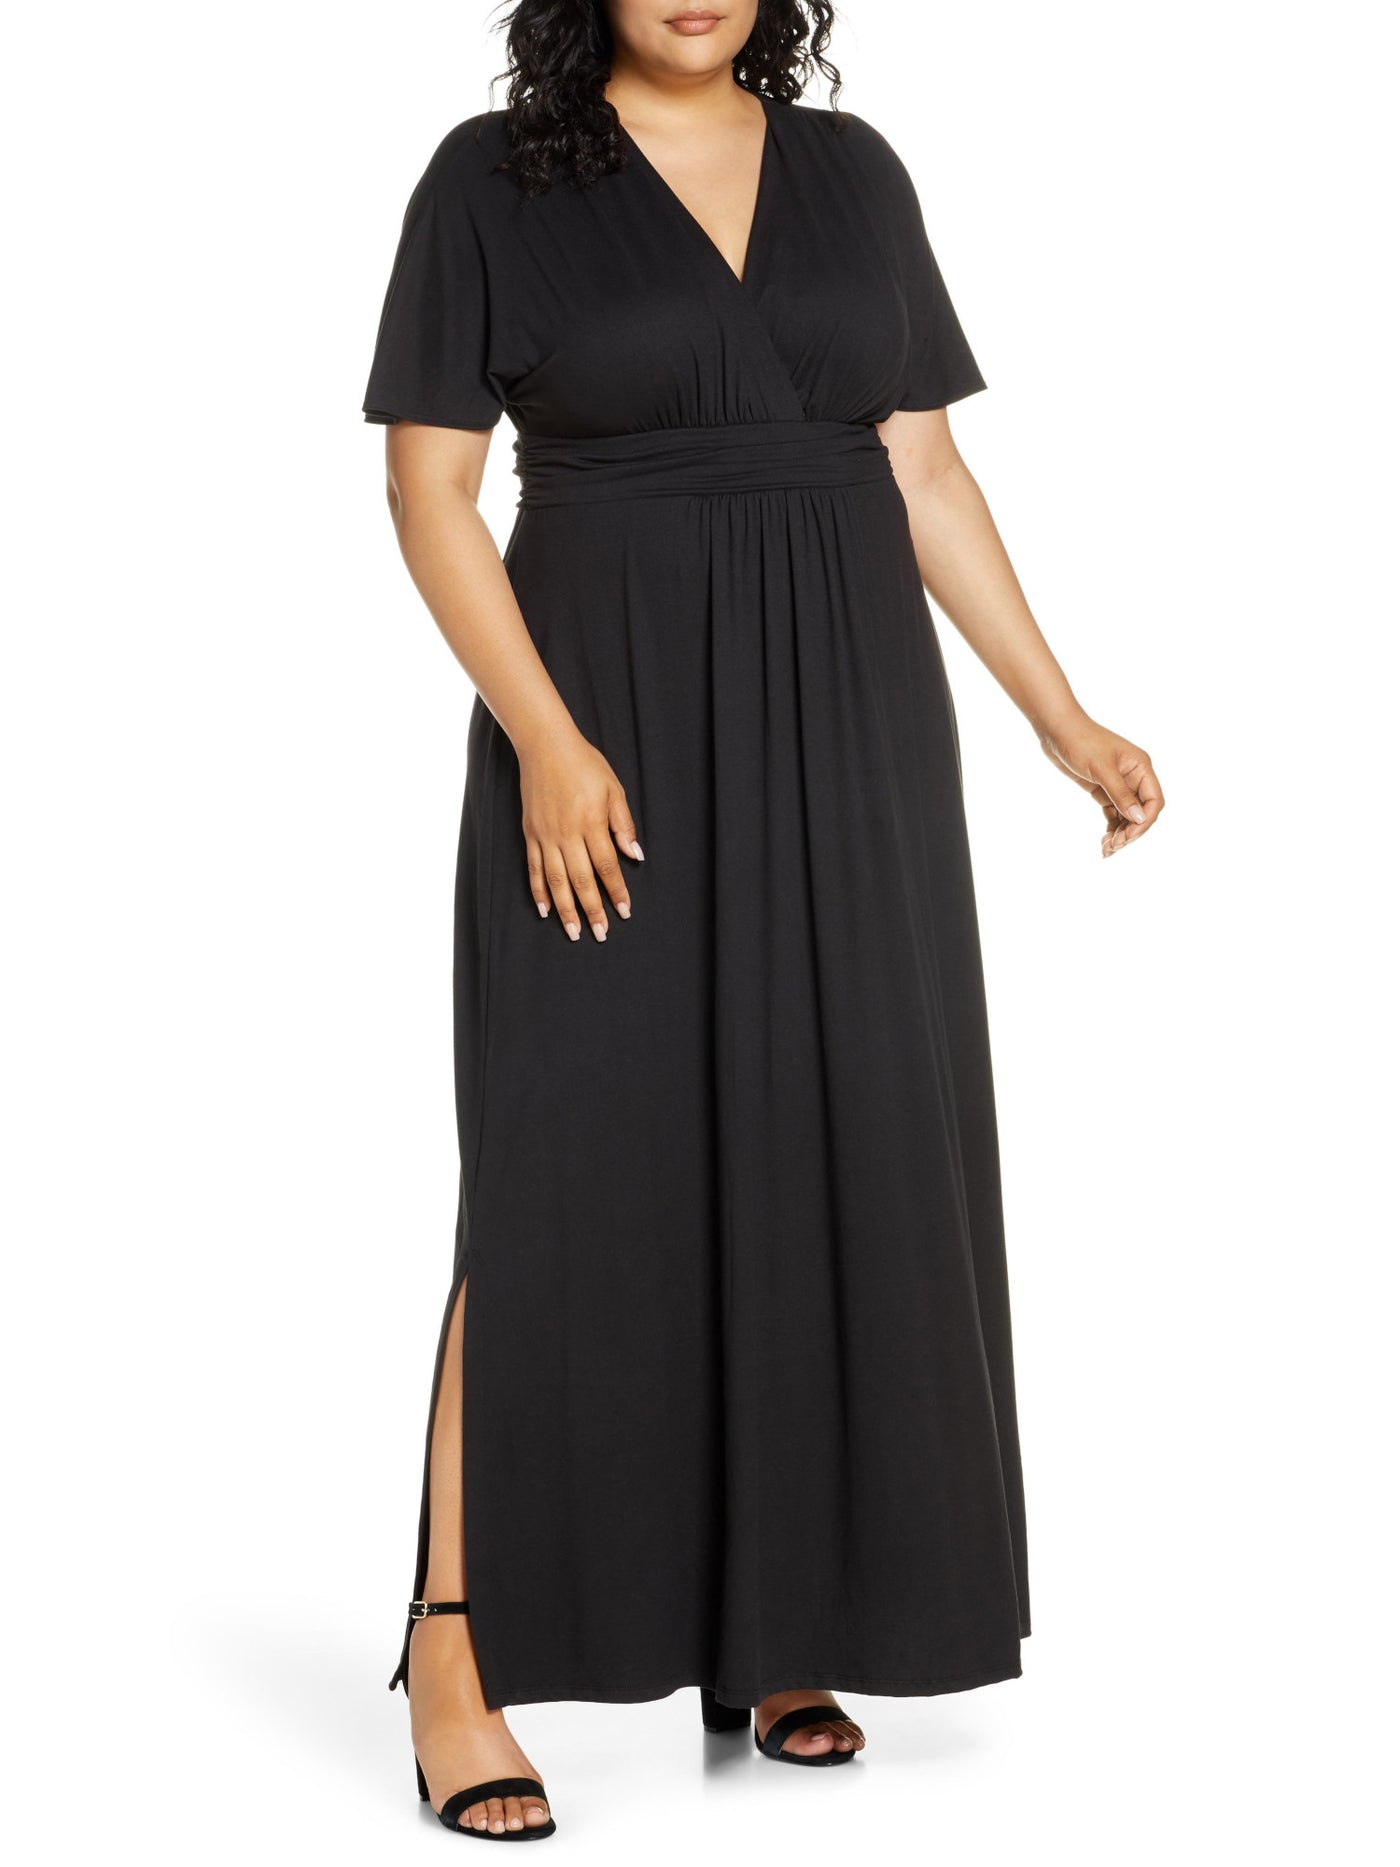 KIYONNA Womens Black Stretch Gathered Slitted Dolman Sleeve Surplice Neckline Maxi Wear To Work Empire Waist Dress Plus 0X